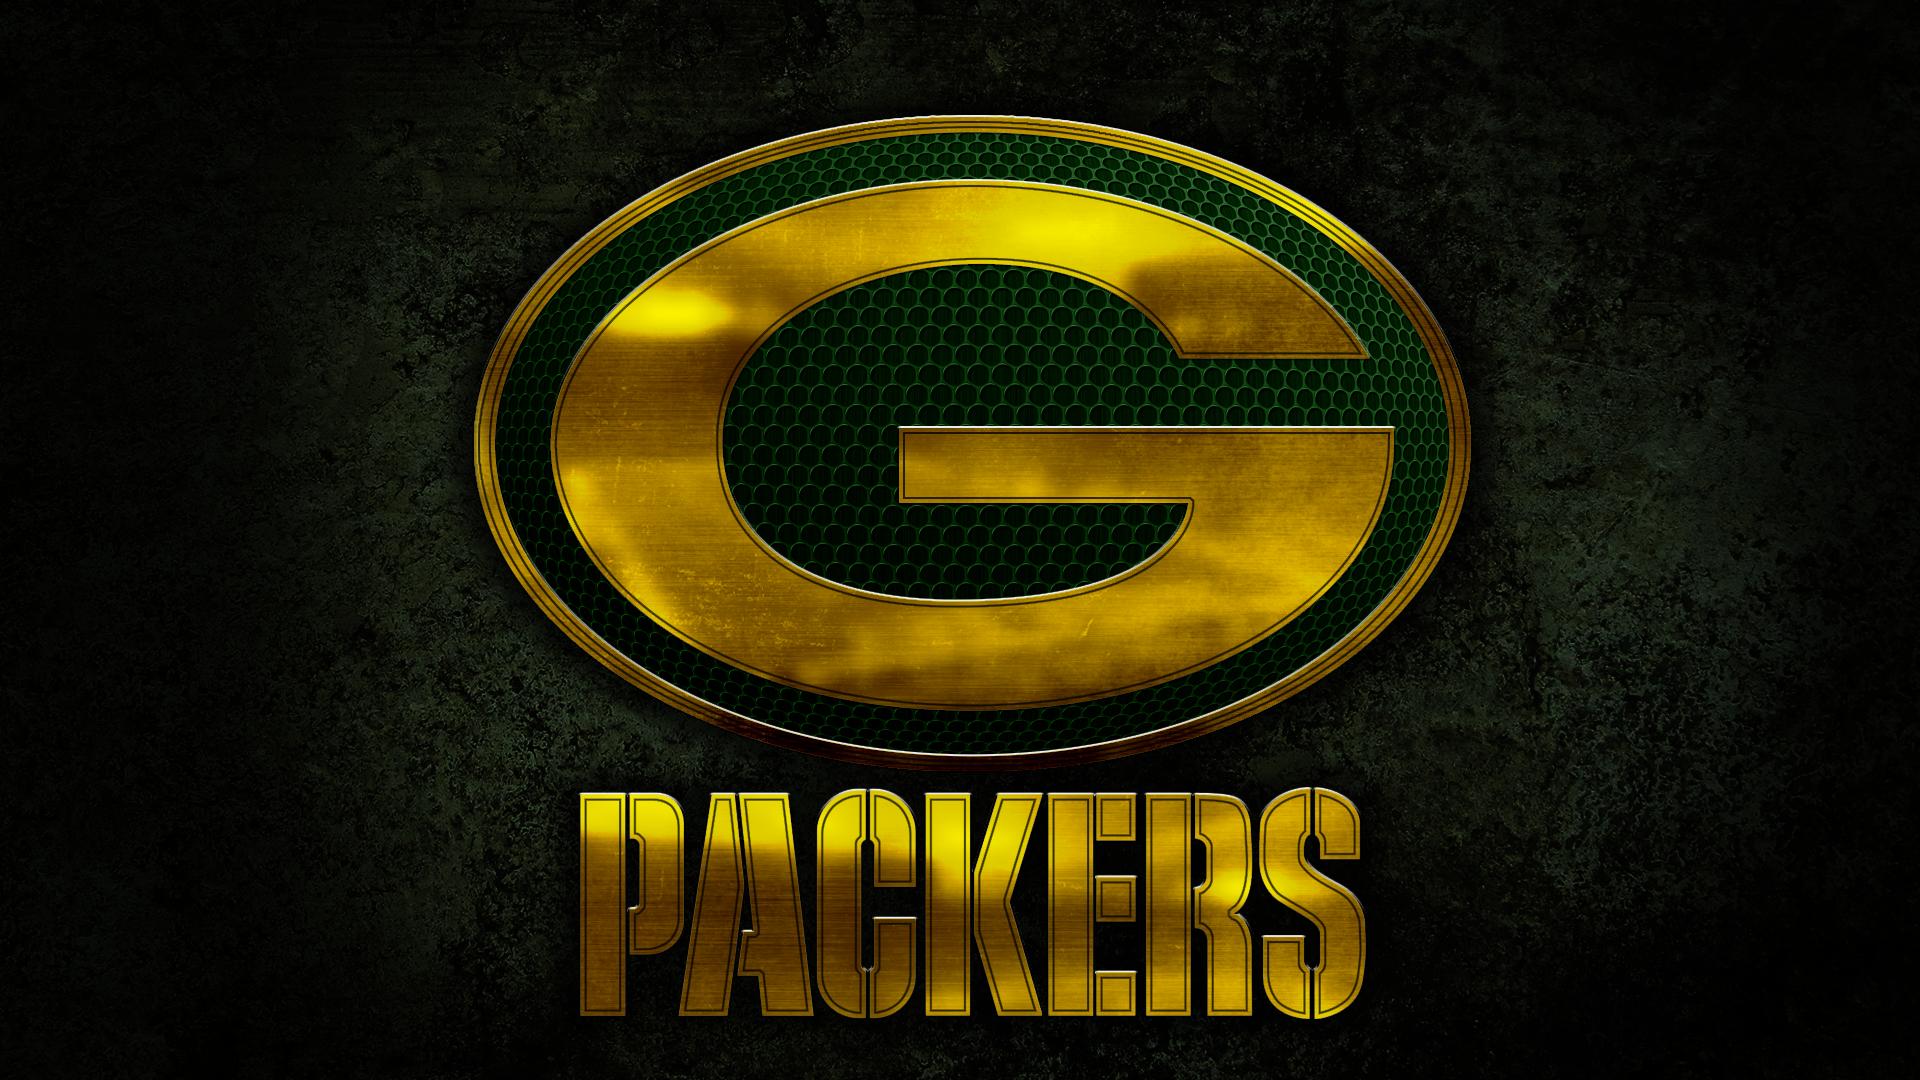 NFL Packers Wallpaper HD 1920x1080